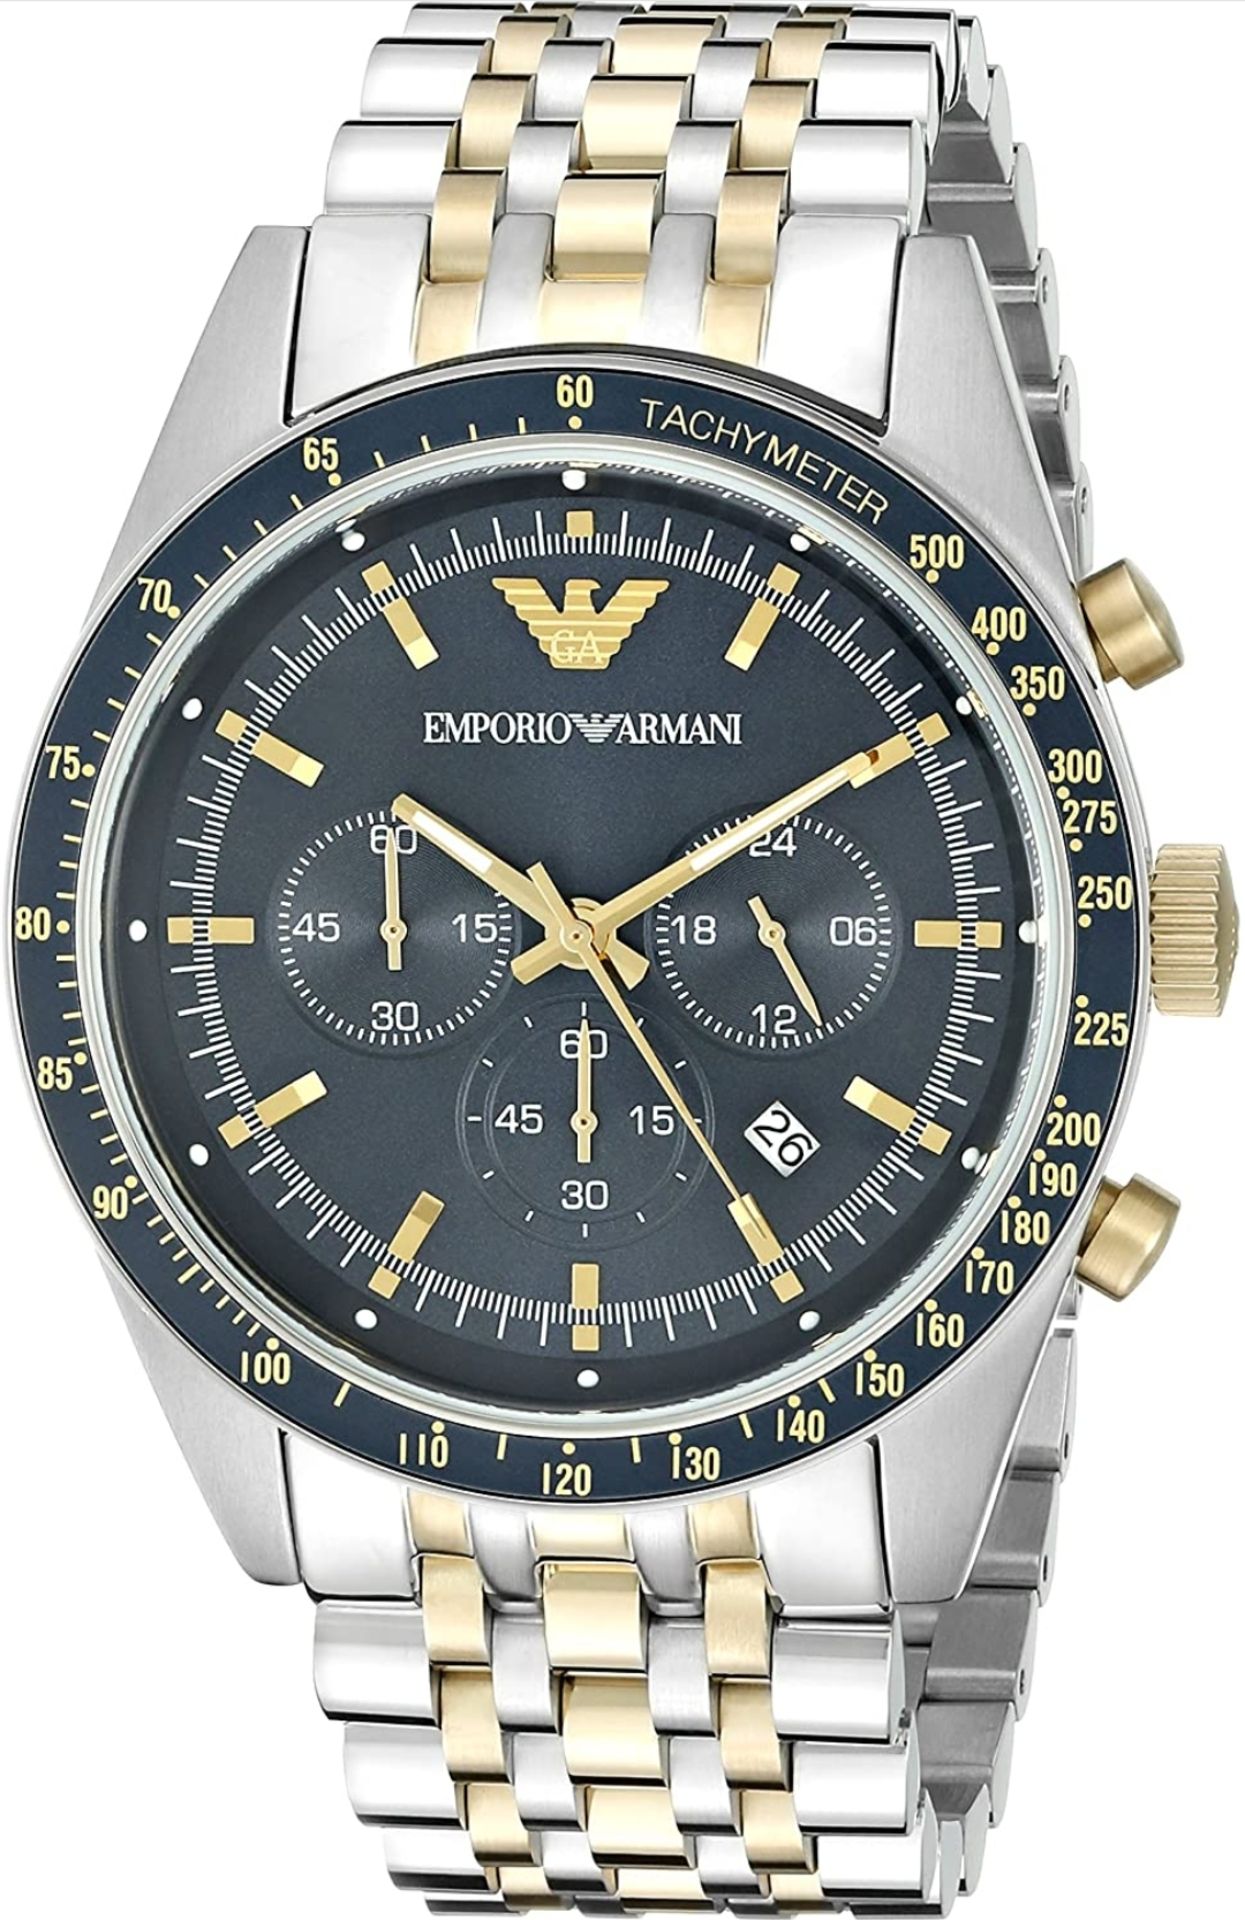 Emporio Armani AR6088 Men's Two Tone Quartz Chronograph Watch - Image 7 of 10